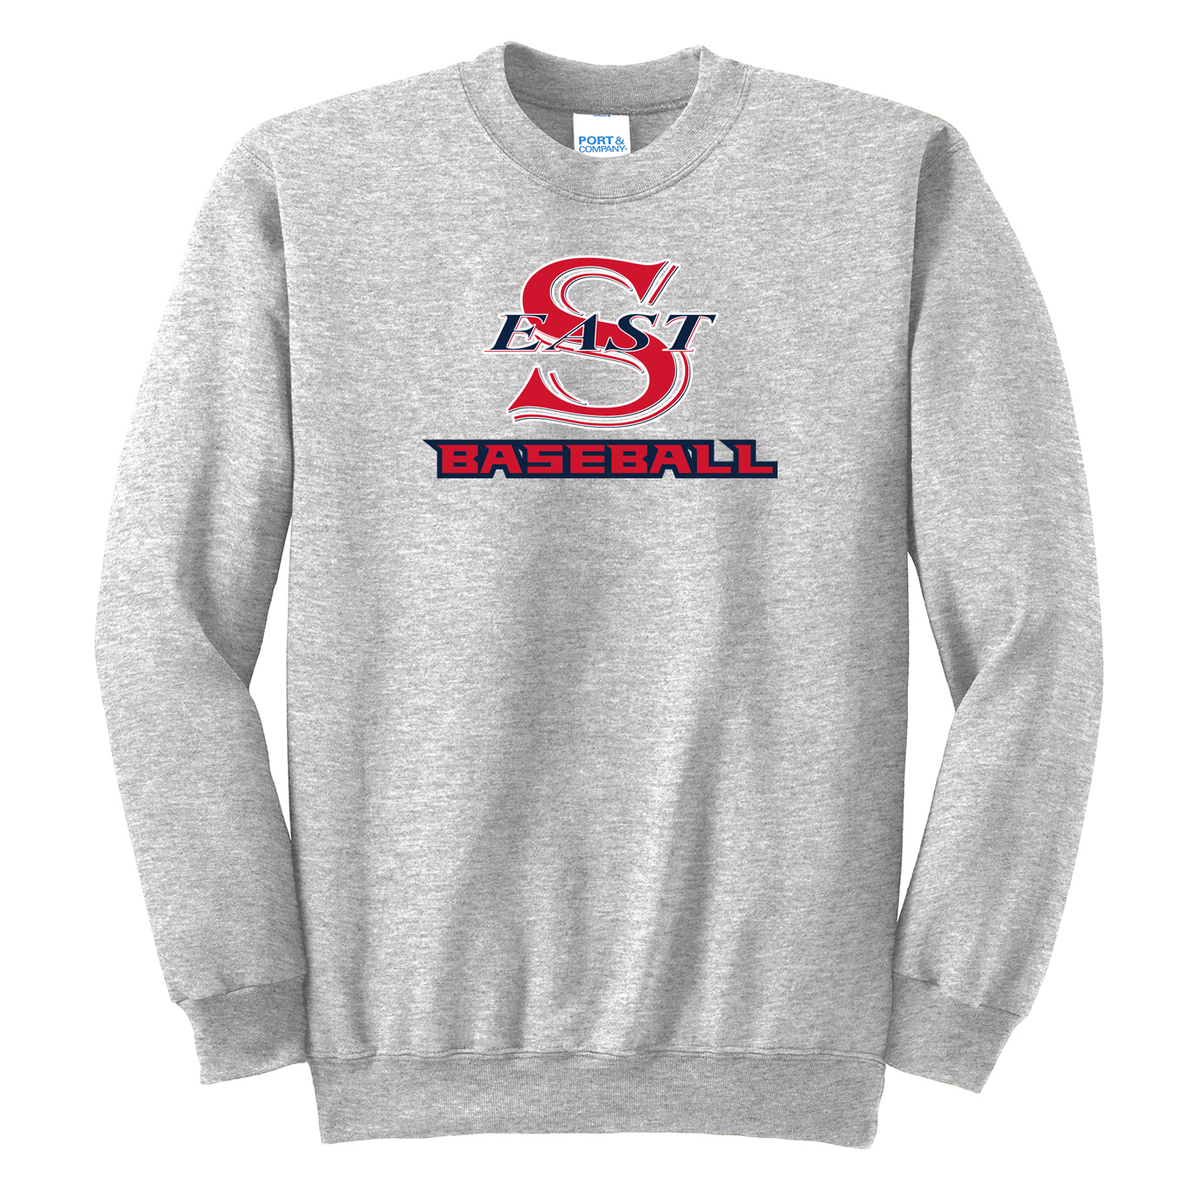 Smithtown East Baseball Crew Neck Sweater